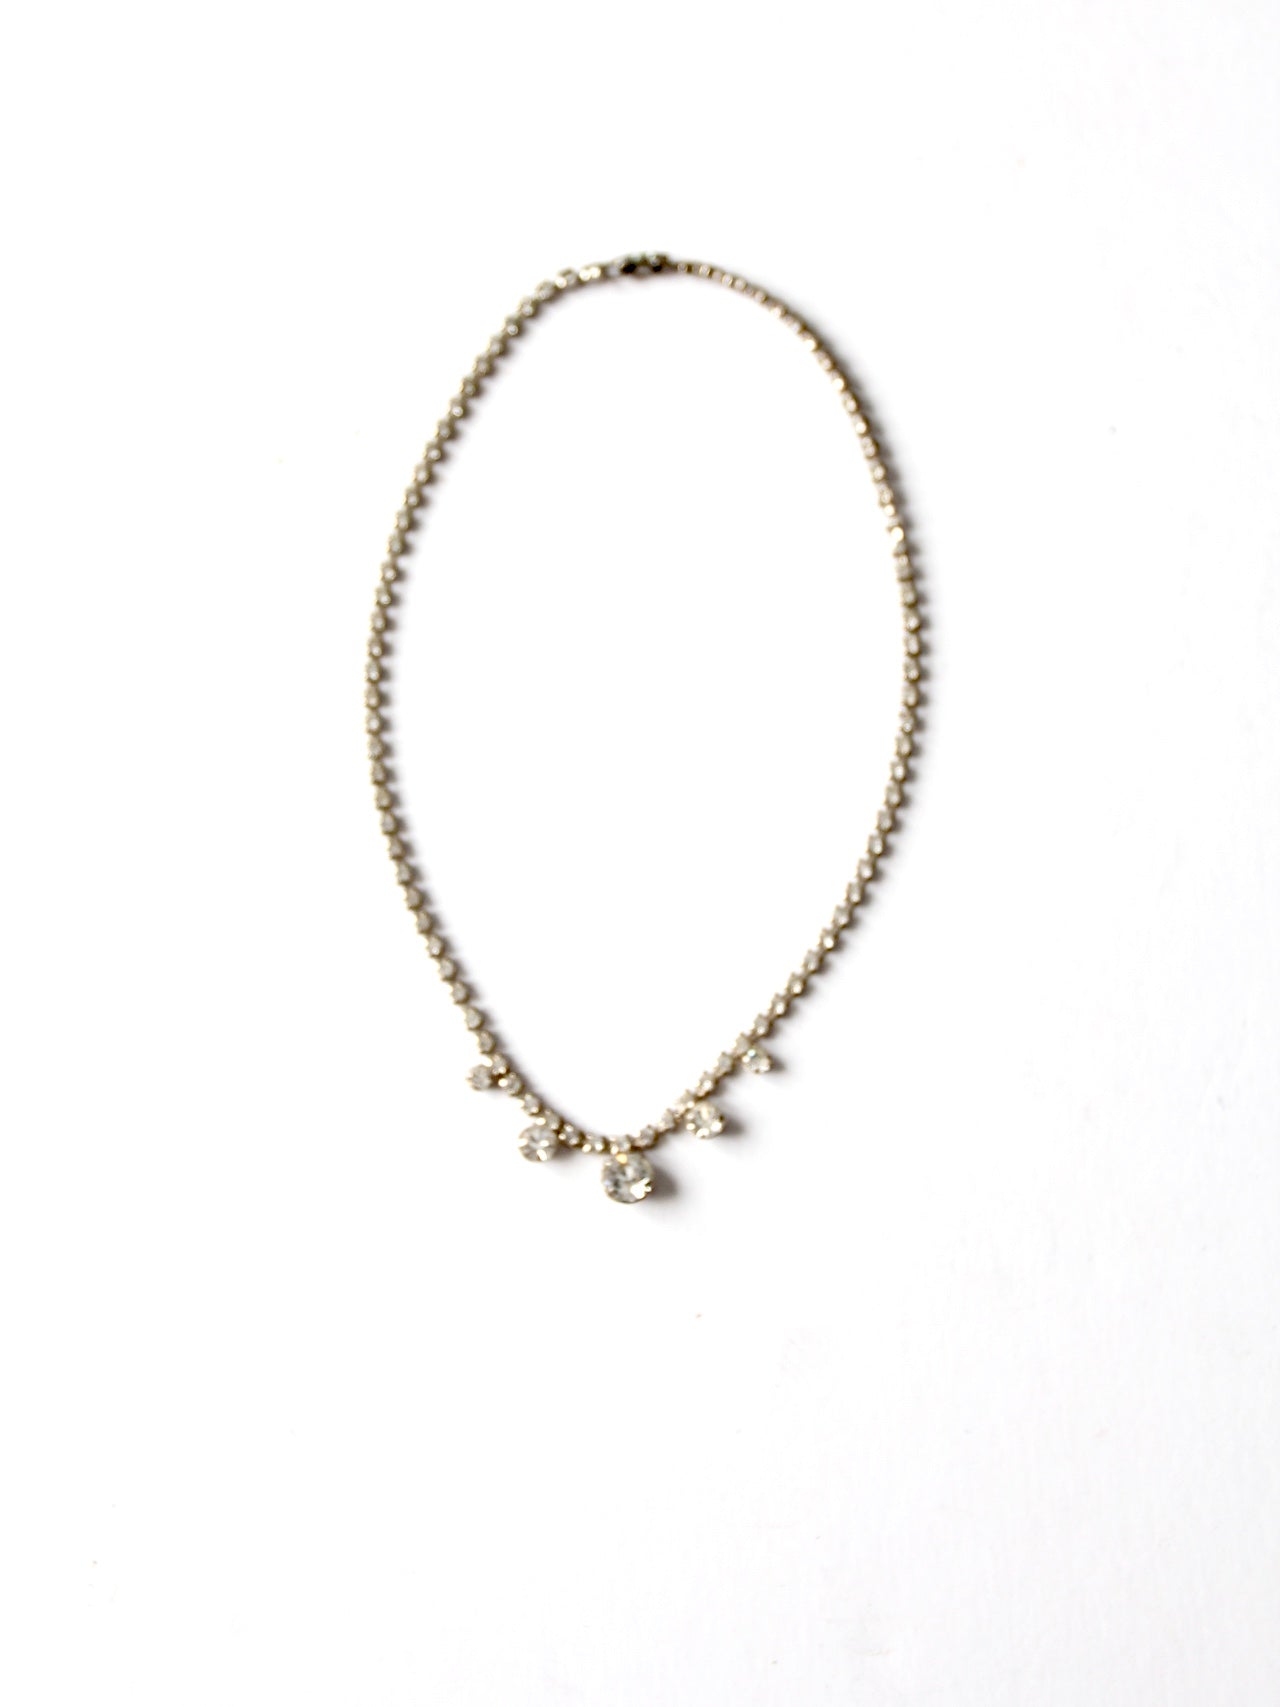 vintage rhinestone necklace